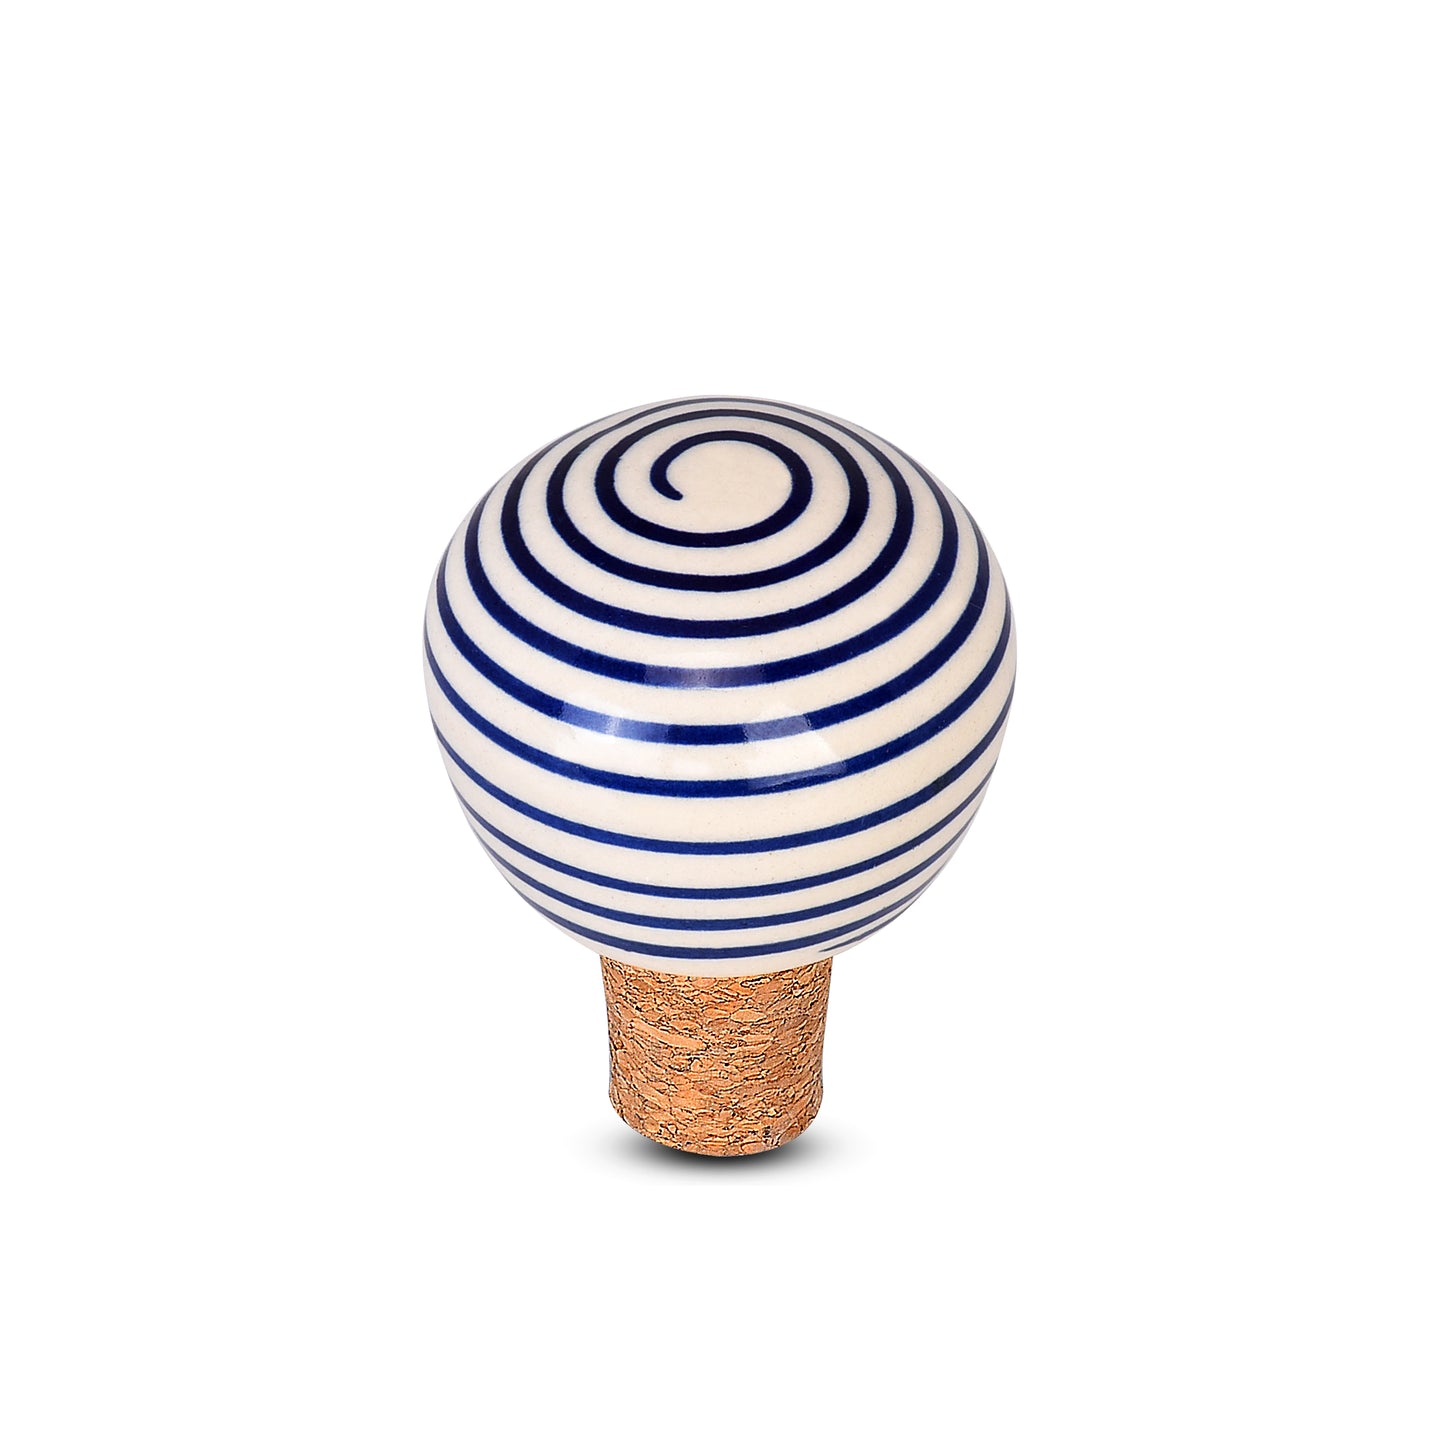 Ceramic Spiral Design Wine Bottle Stopper